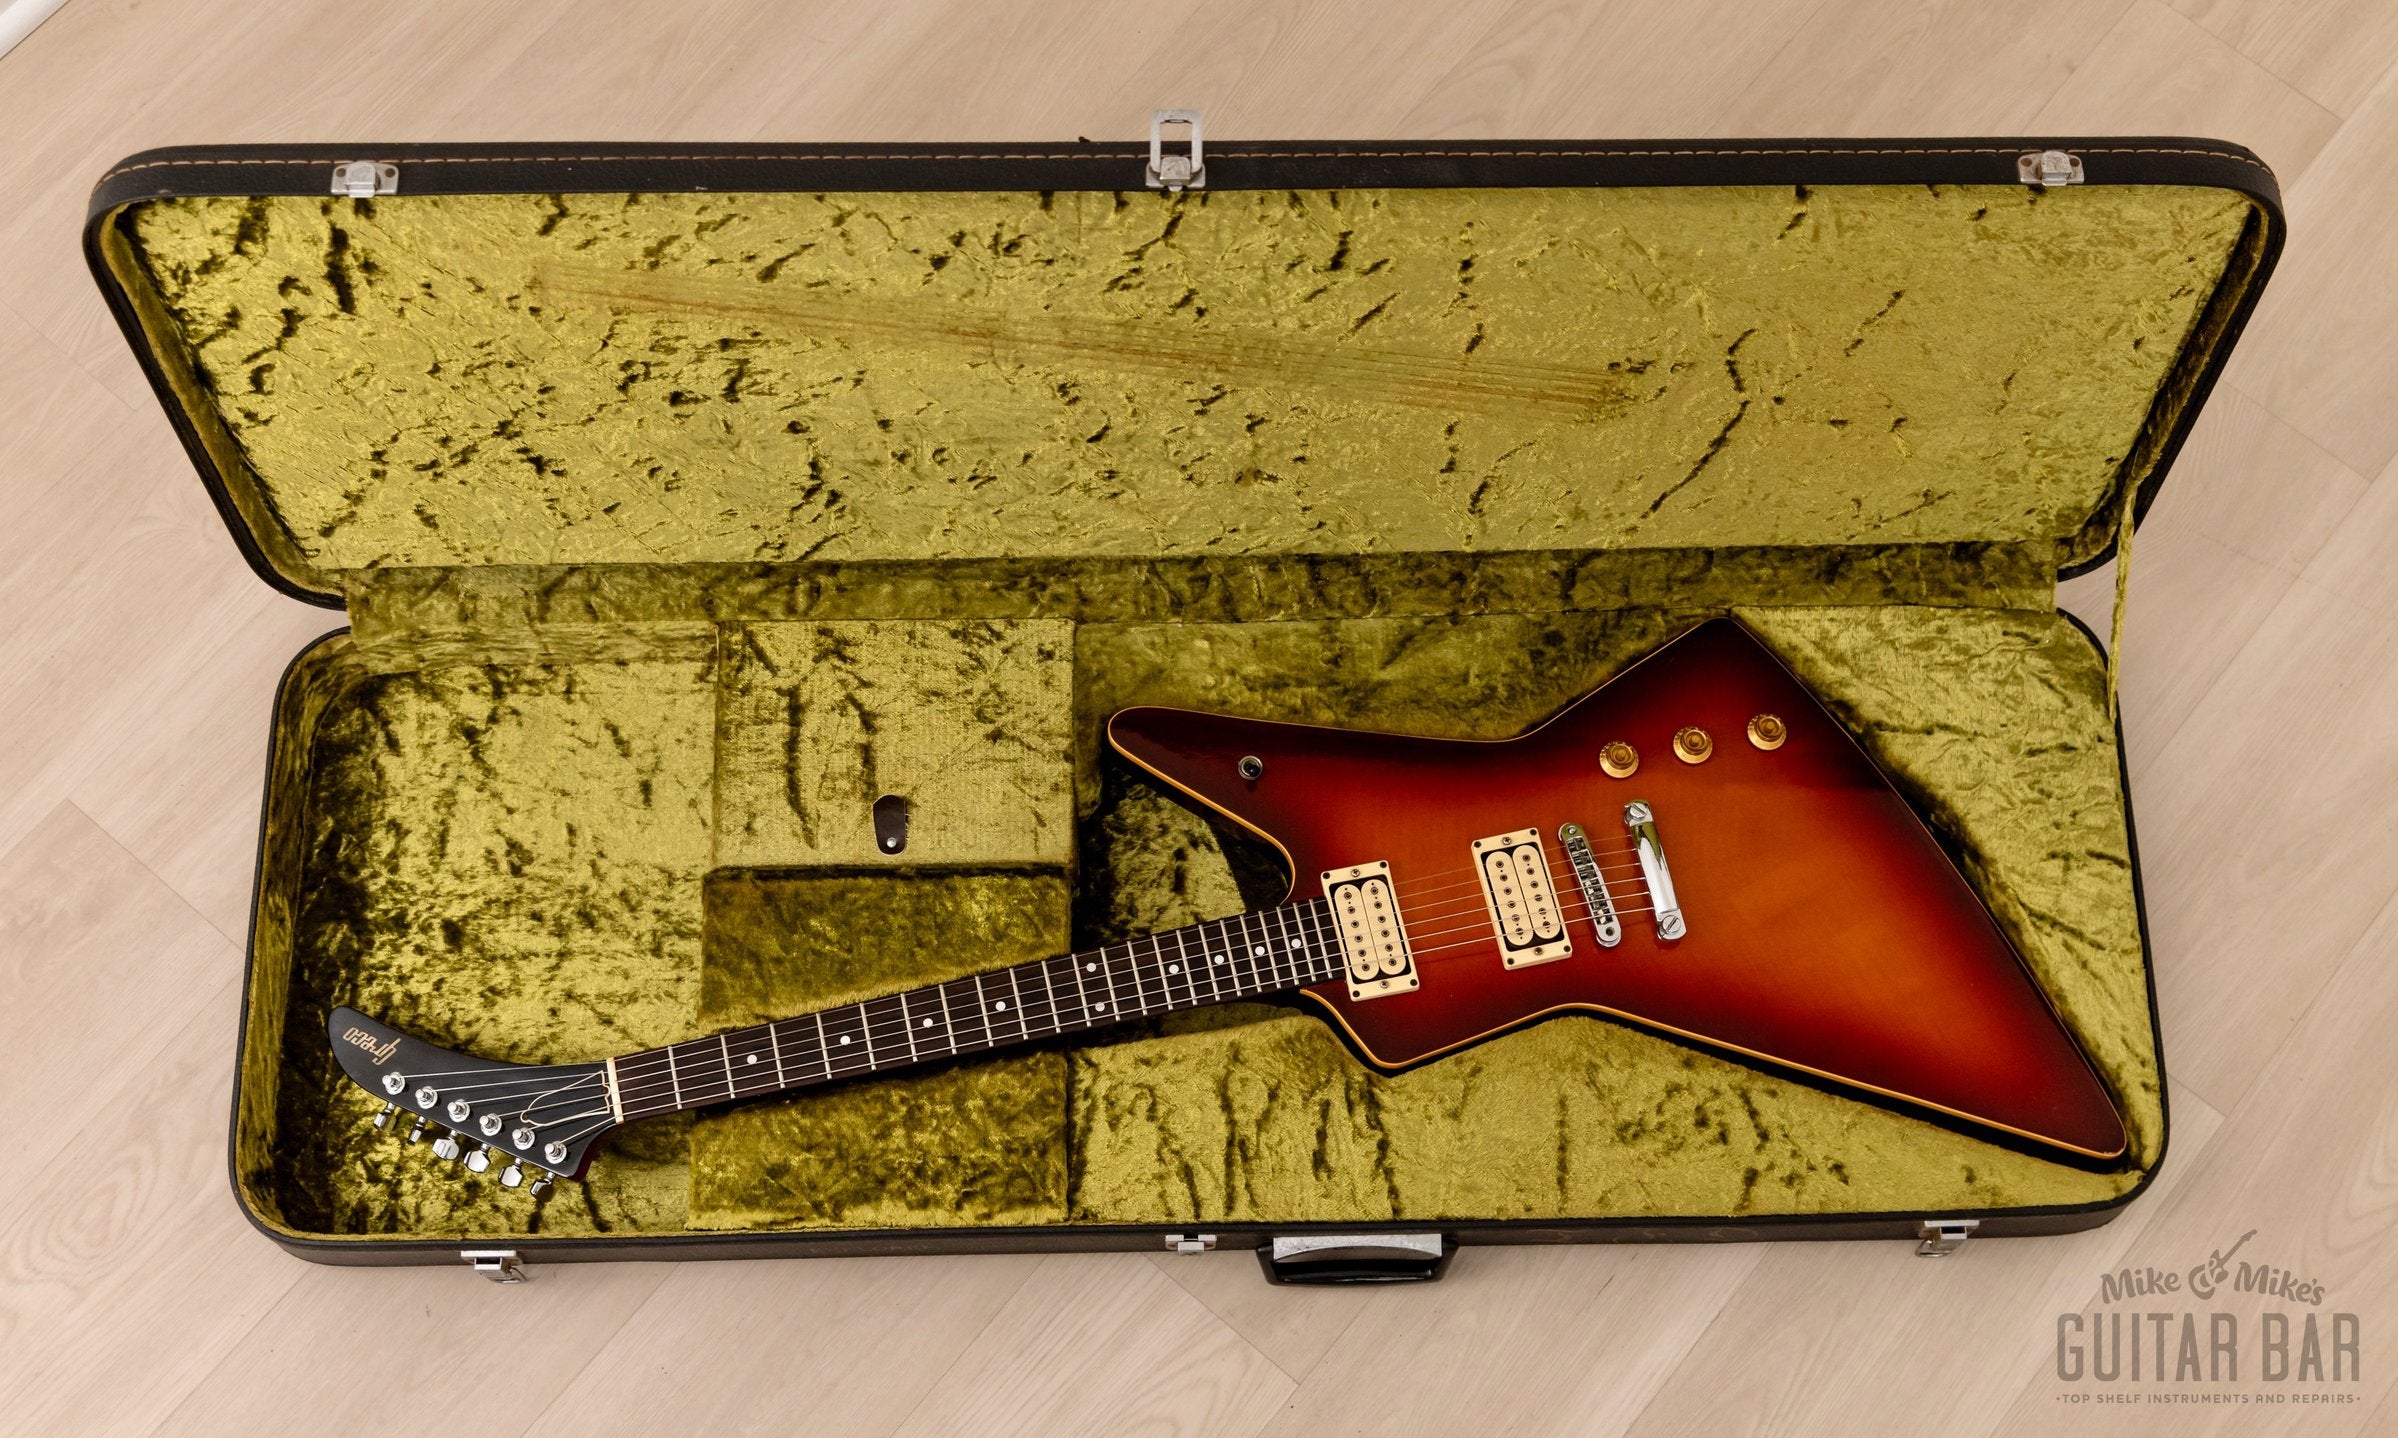 1978 Greco EX800HR Explorer Vintage Guitar Flame Maple Top w/ ESP Pickups & Case, Japan Fujigen